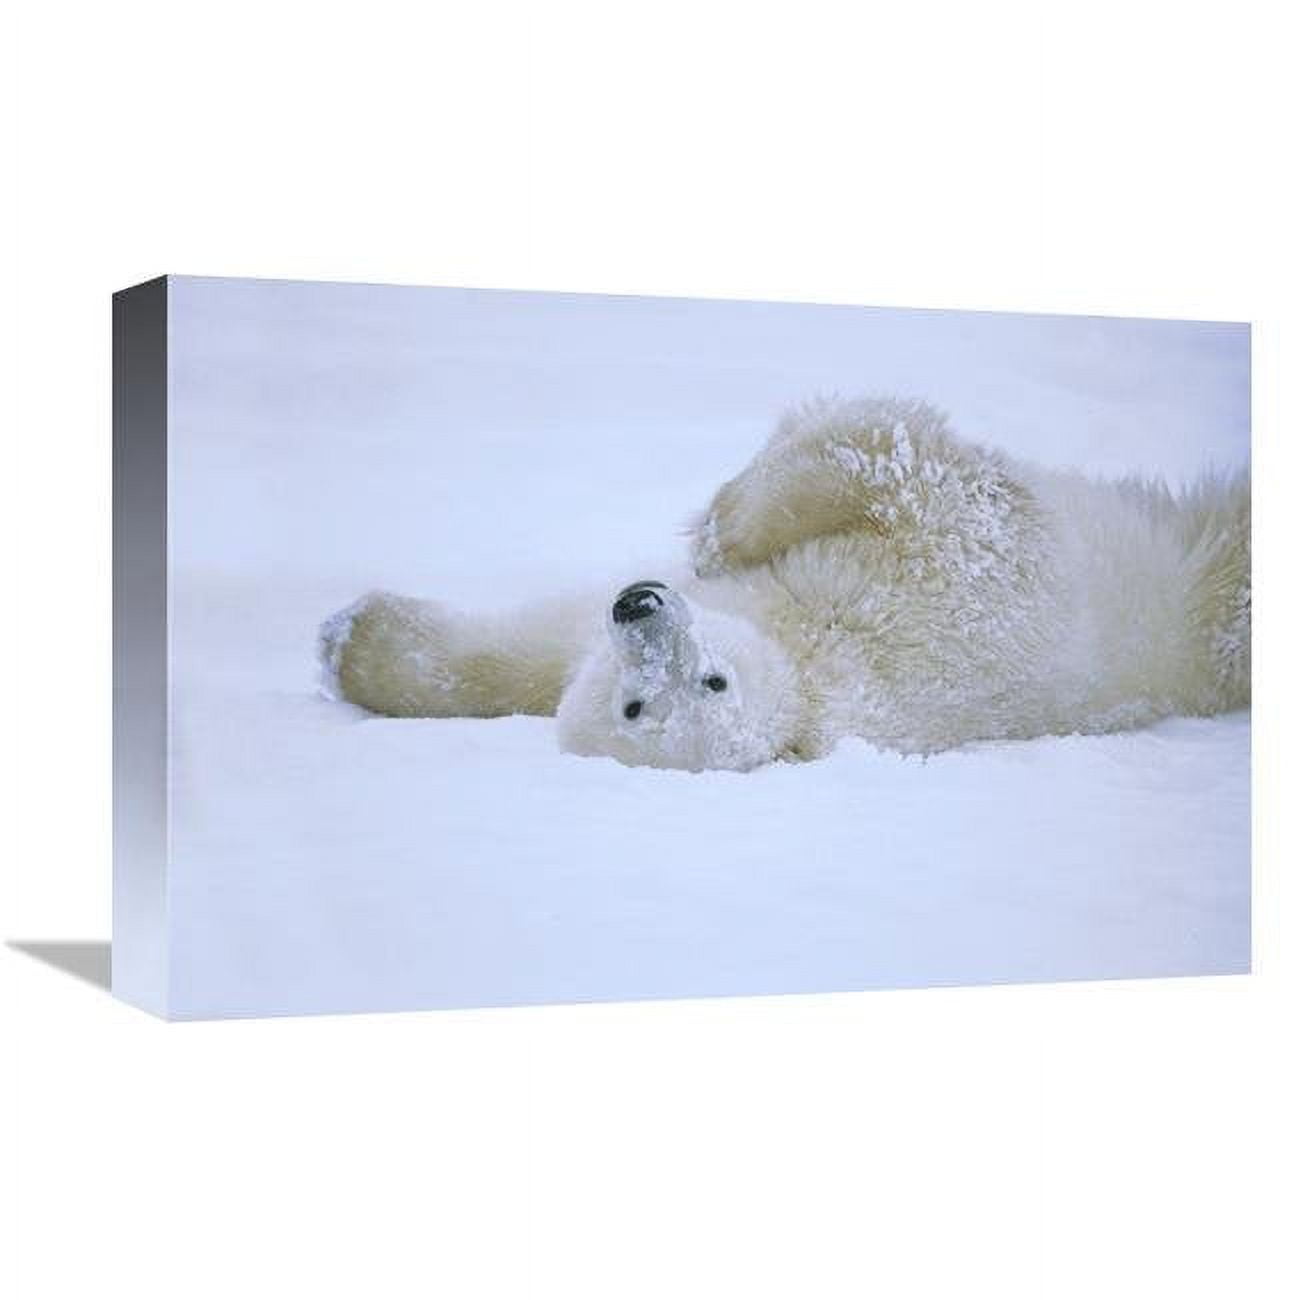 JensenDistributionServices 12 x 18 in. Polar Bear Rolling in Snow, Hudson Bay, Canada Art Print - Konrad Wothe